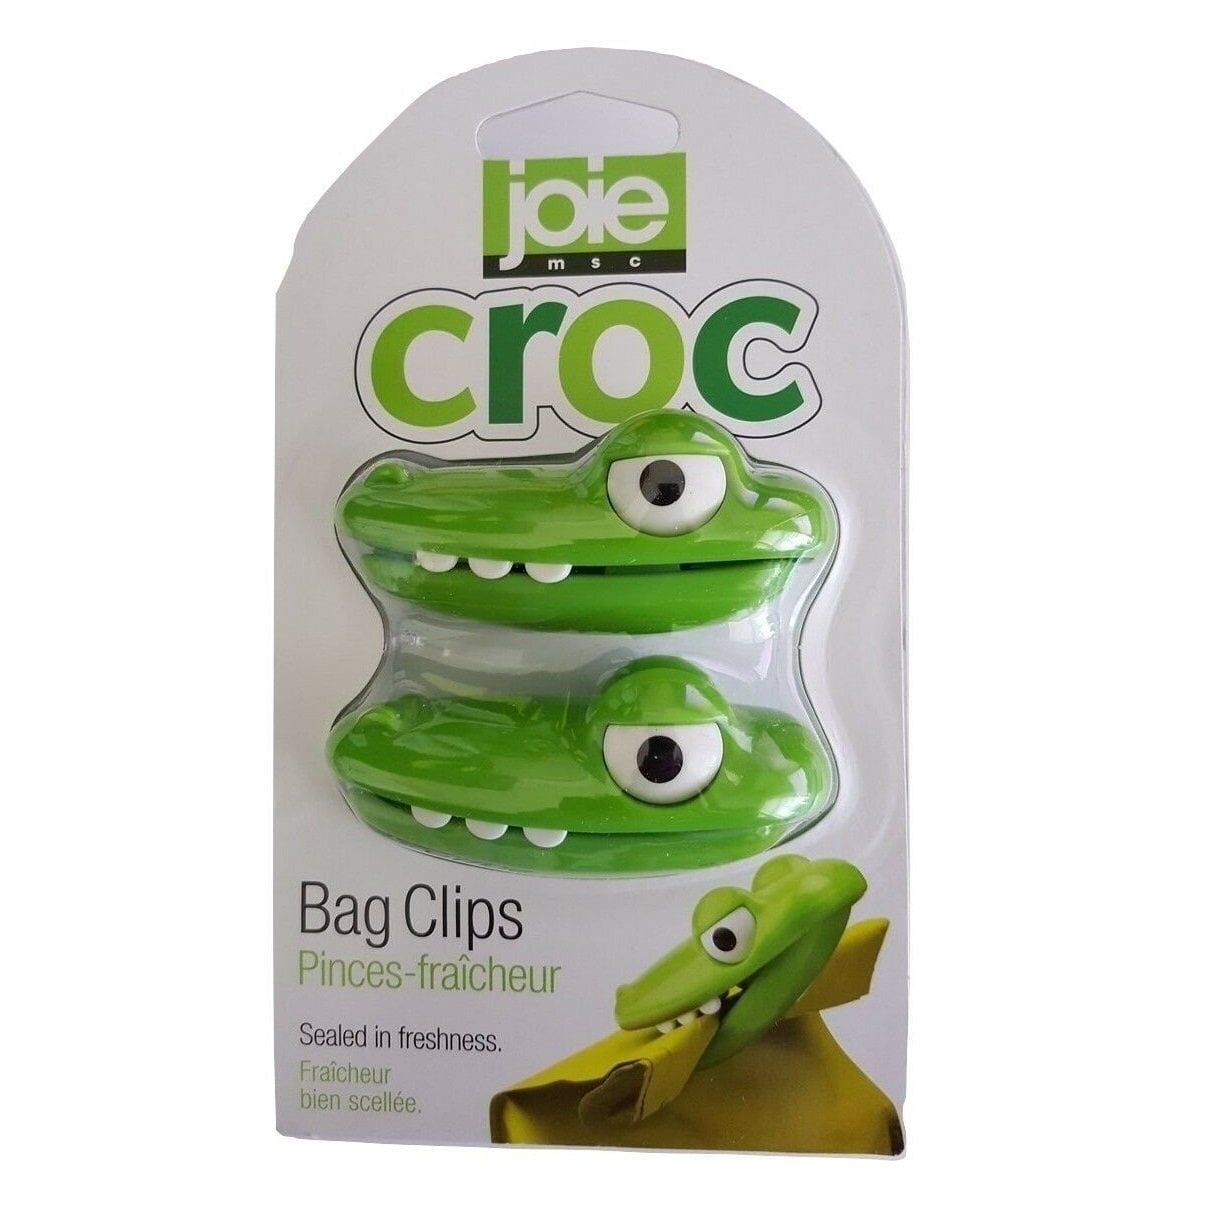 Joie Crocodile Kitchen Gadgets Scrub Brush Peeler Seald Bag Clips